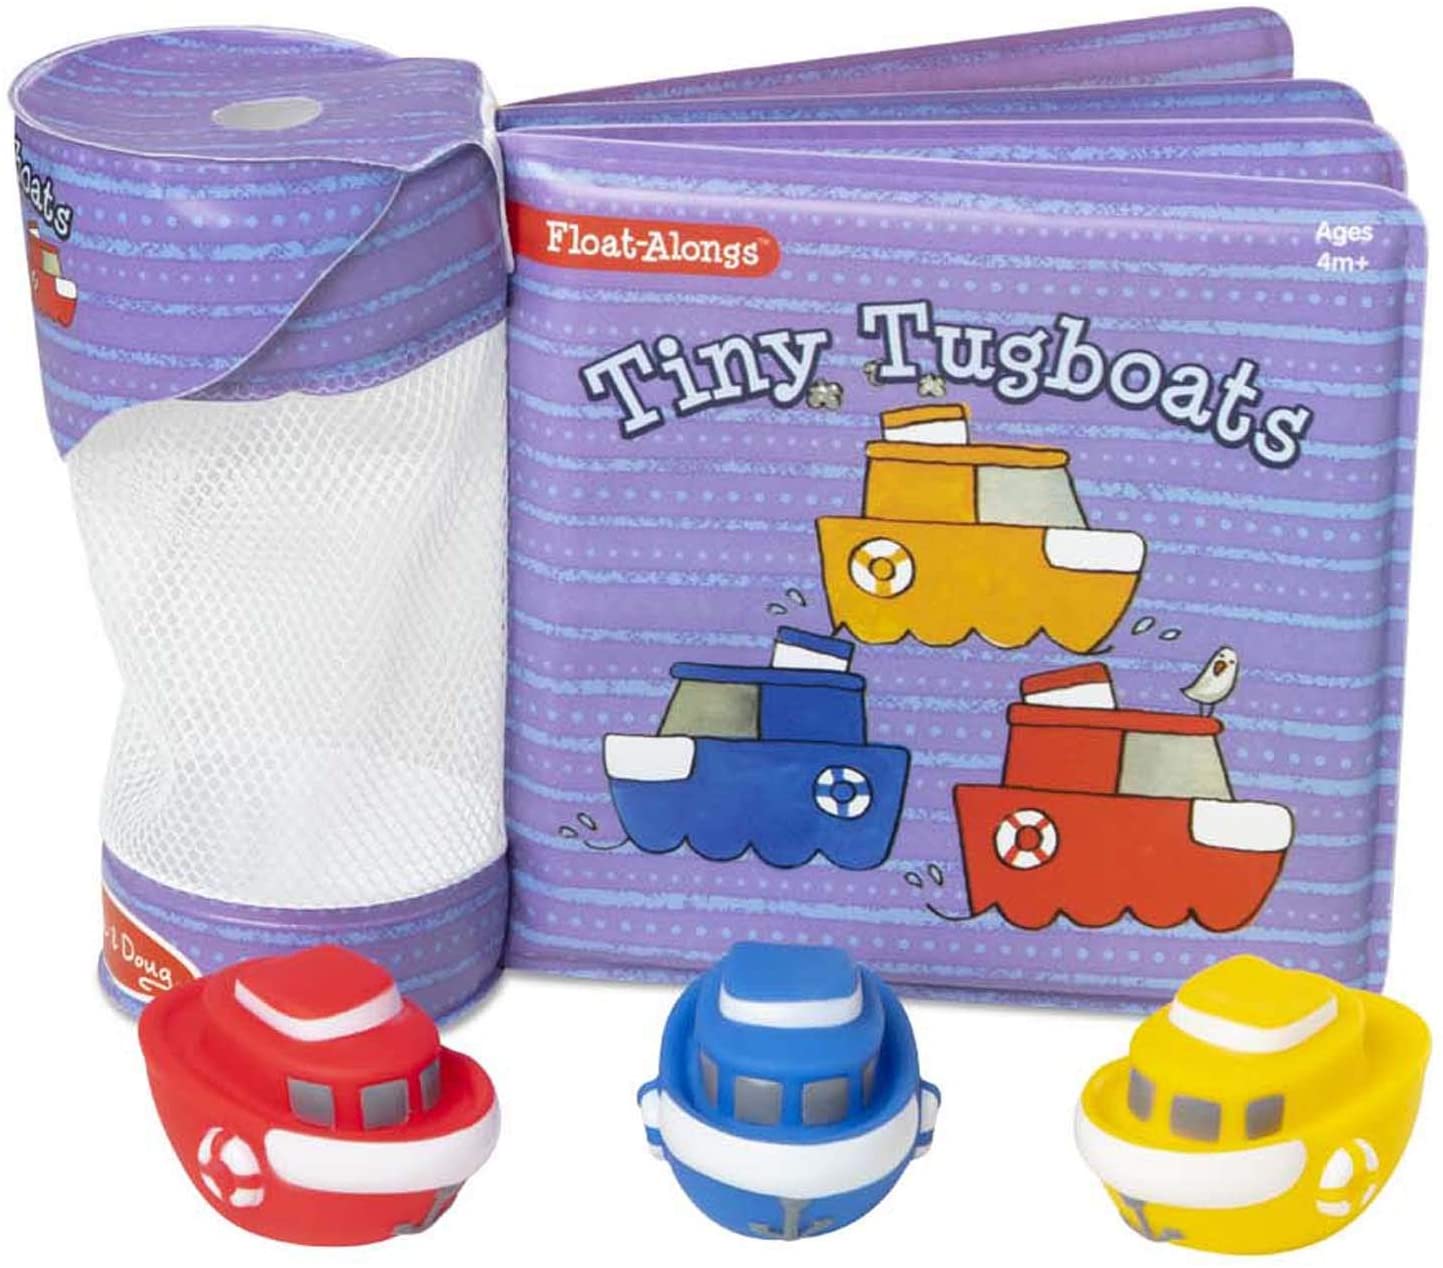 Melissa & Doug Kids' Float Alongs Children's Bath Book & 3 Floating Tugboat Bath Toys $7 + FS w/ Amazon Prime or FS on $25+